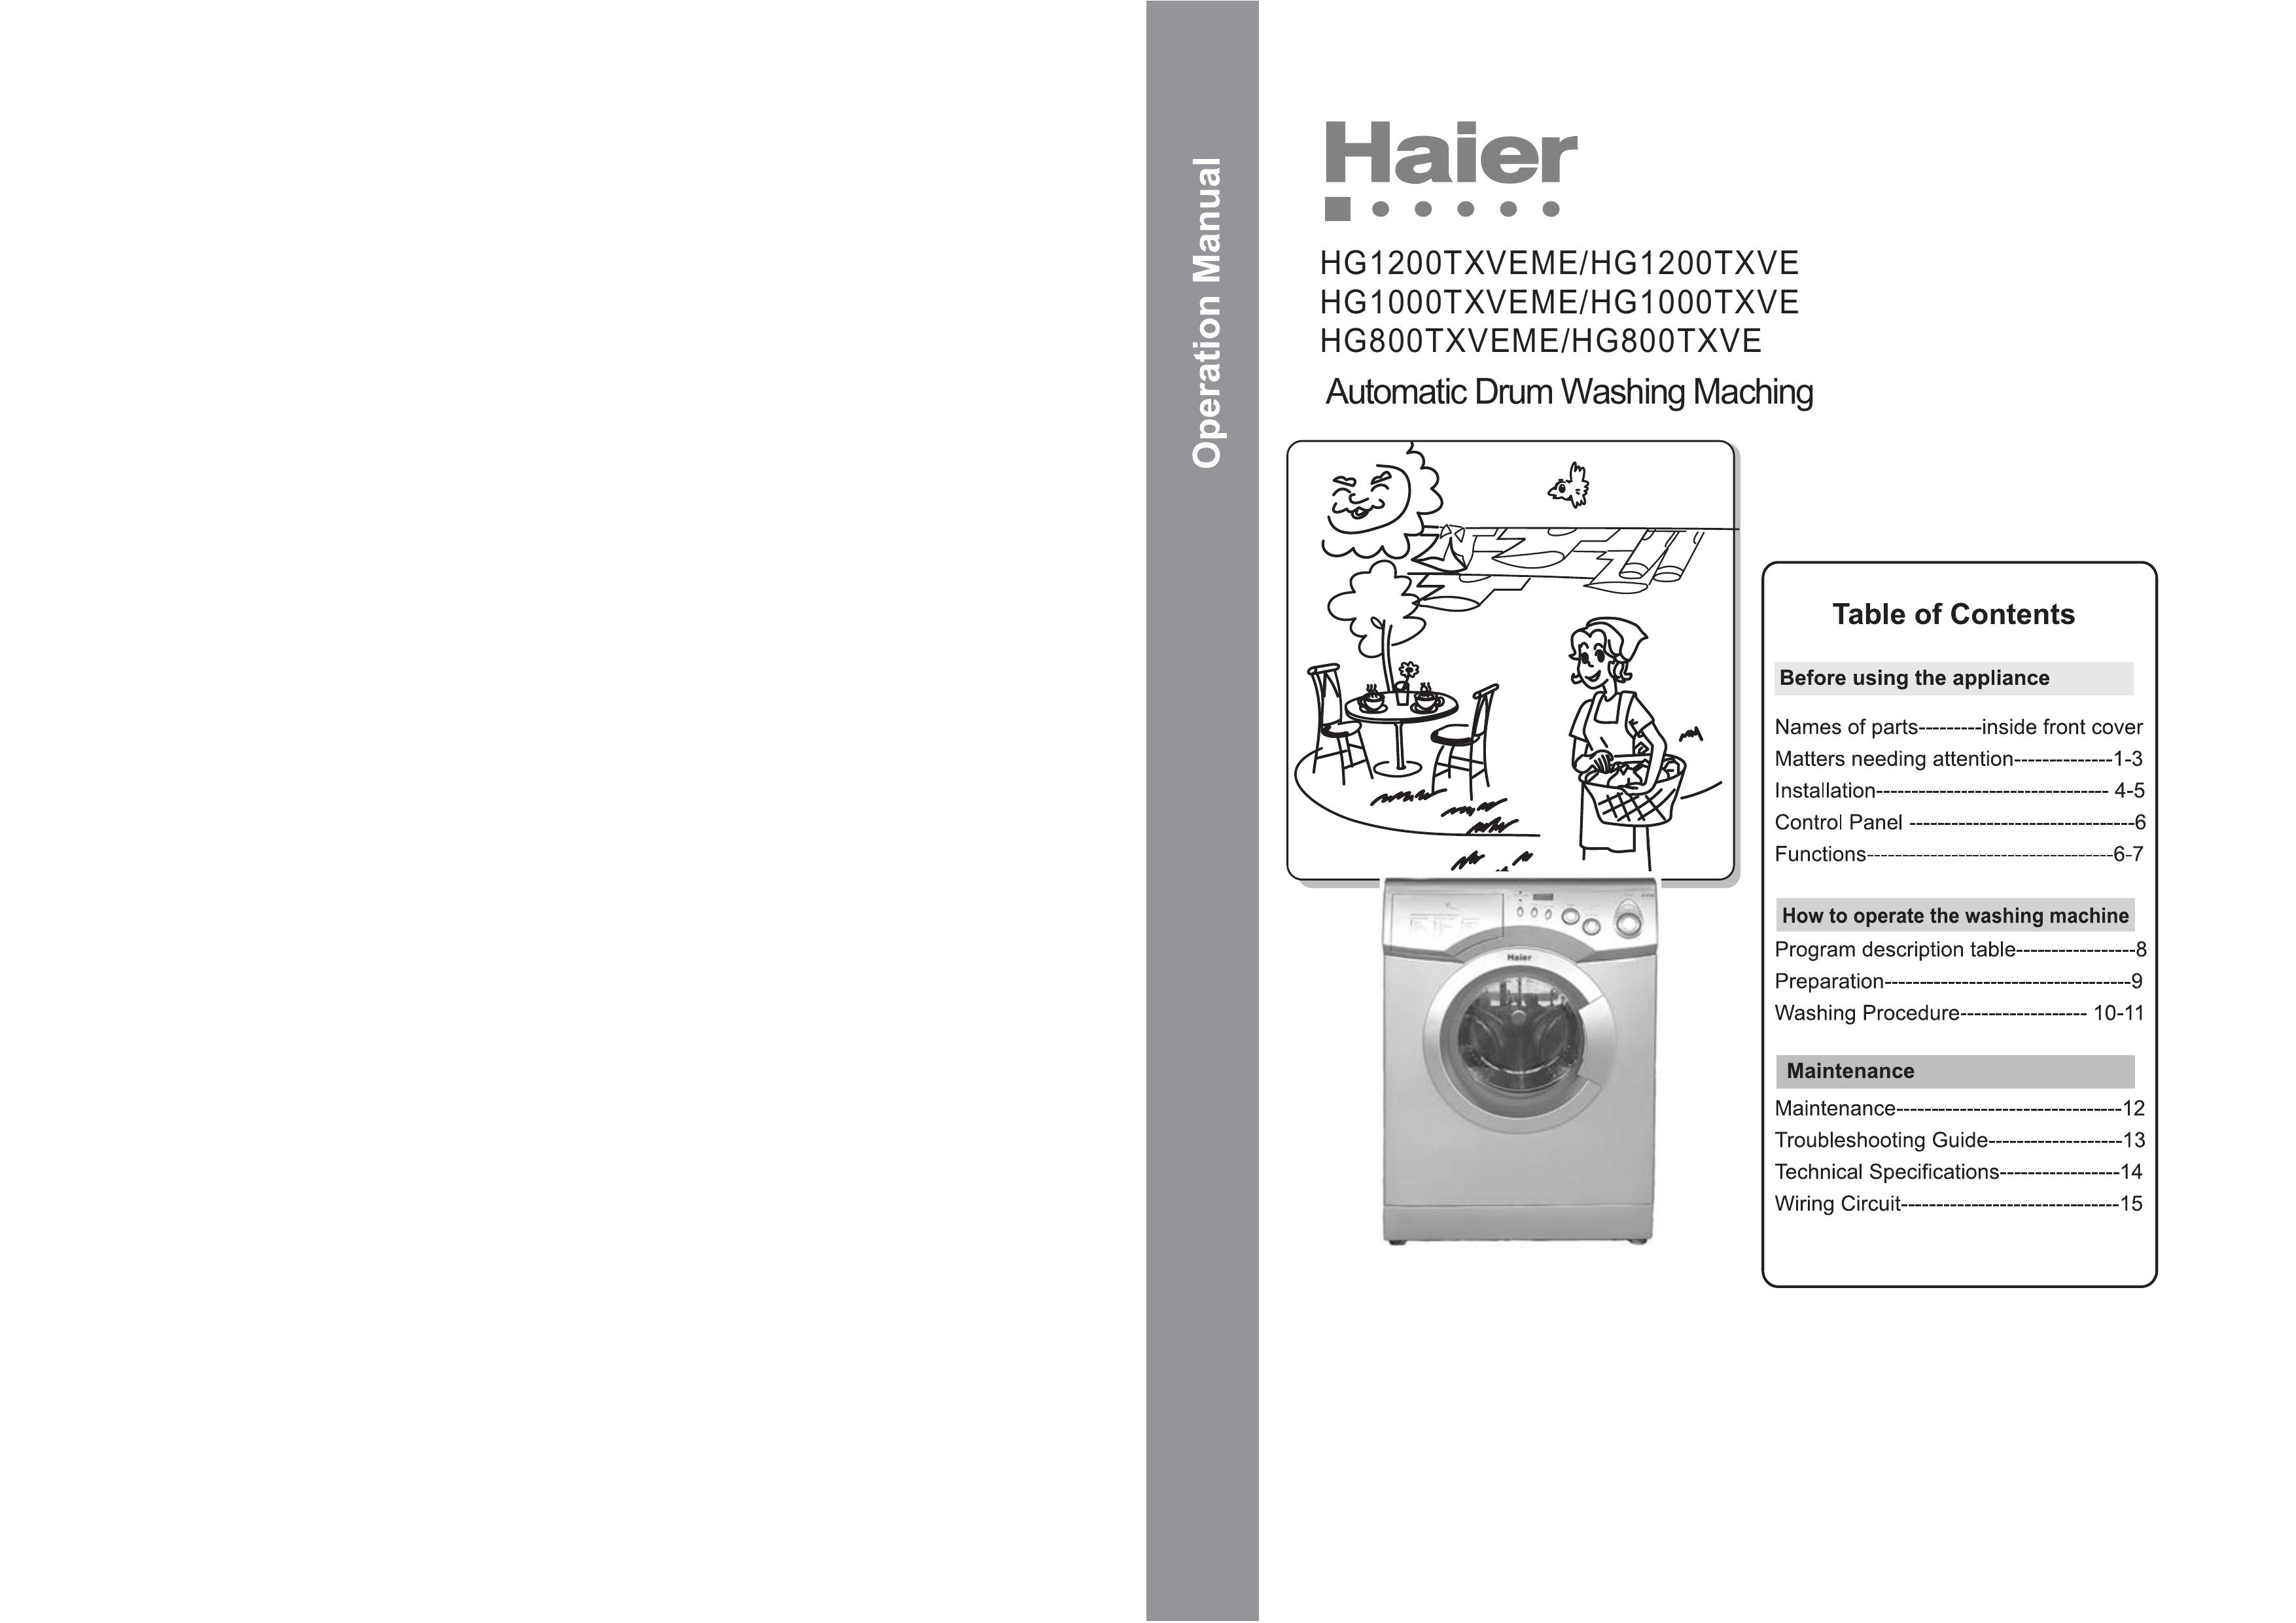 Haier HG1200TXVEME Washer/Dryer User Manual